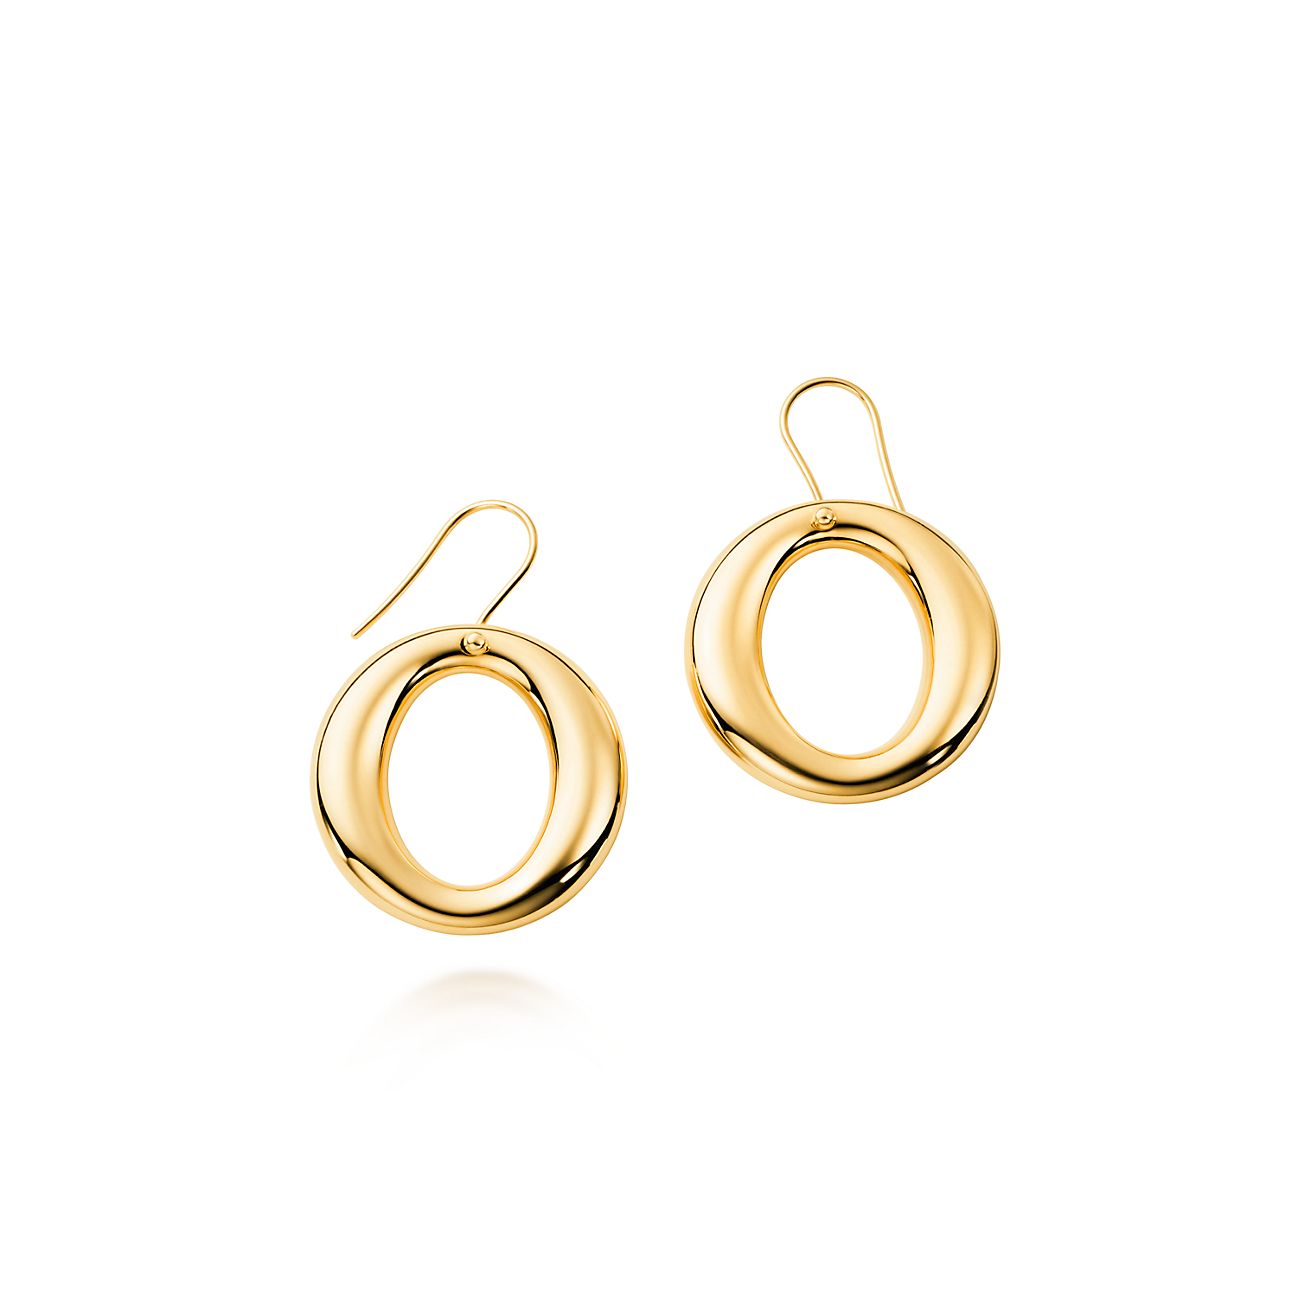 Elsa Peretti® Sevillana earrings in 18k gold, small. | Tiffany & Co.